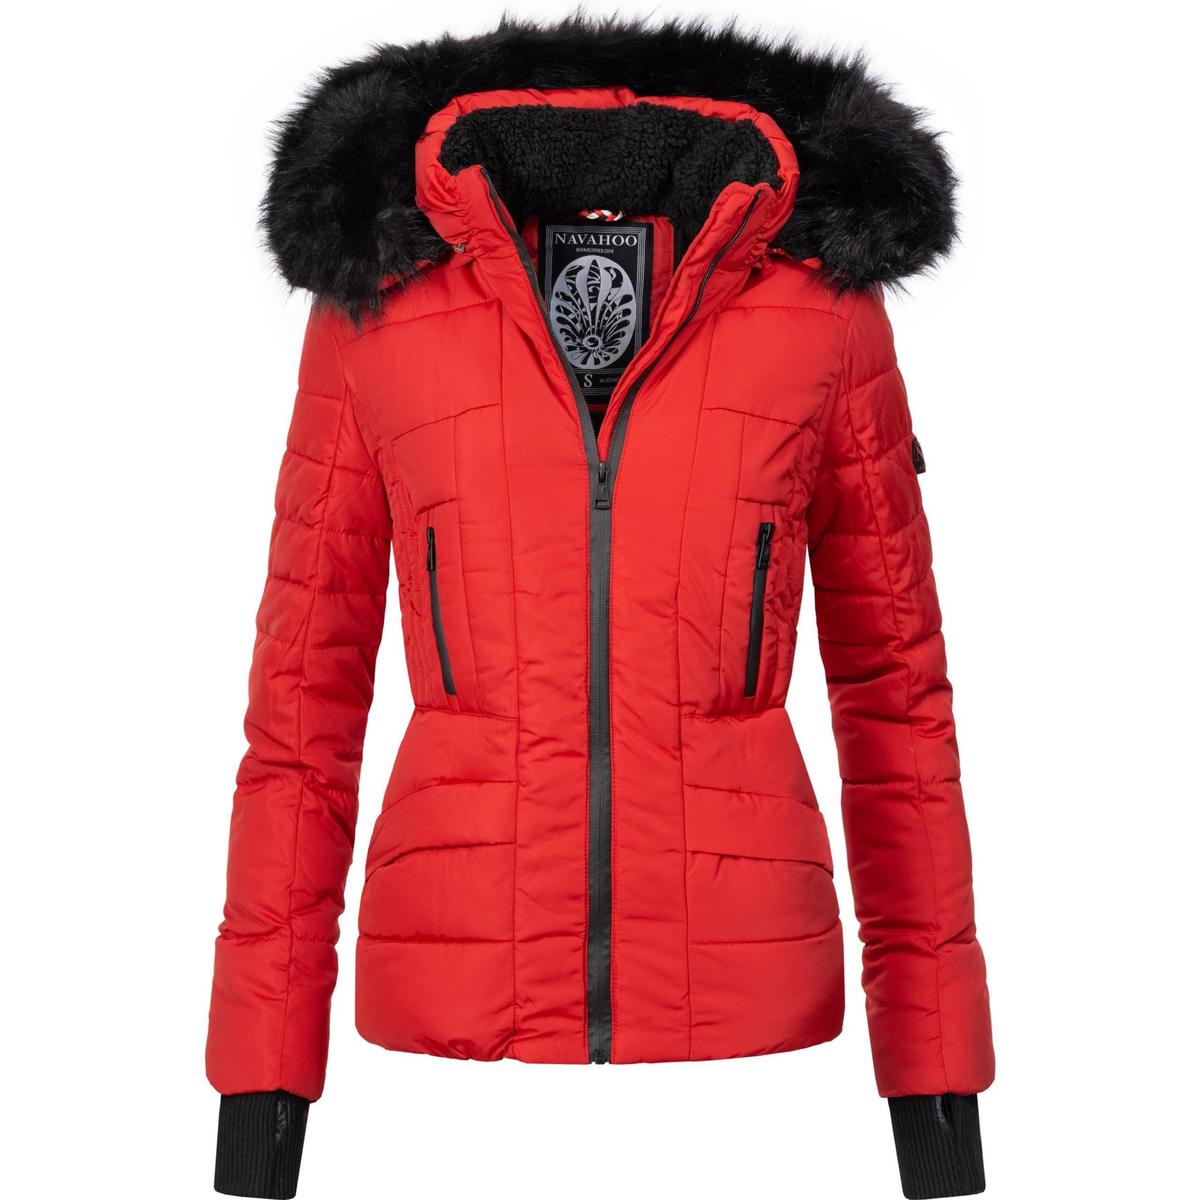 Navahoo Winterjacke - Jacken Rot Adele Damen Kleidung 119,95 €